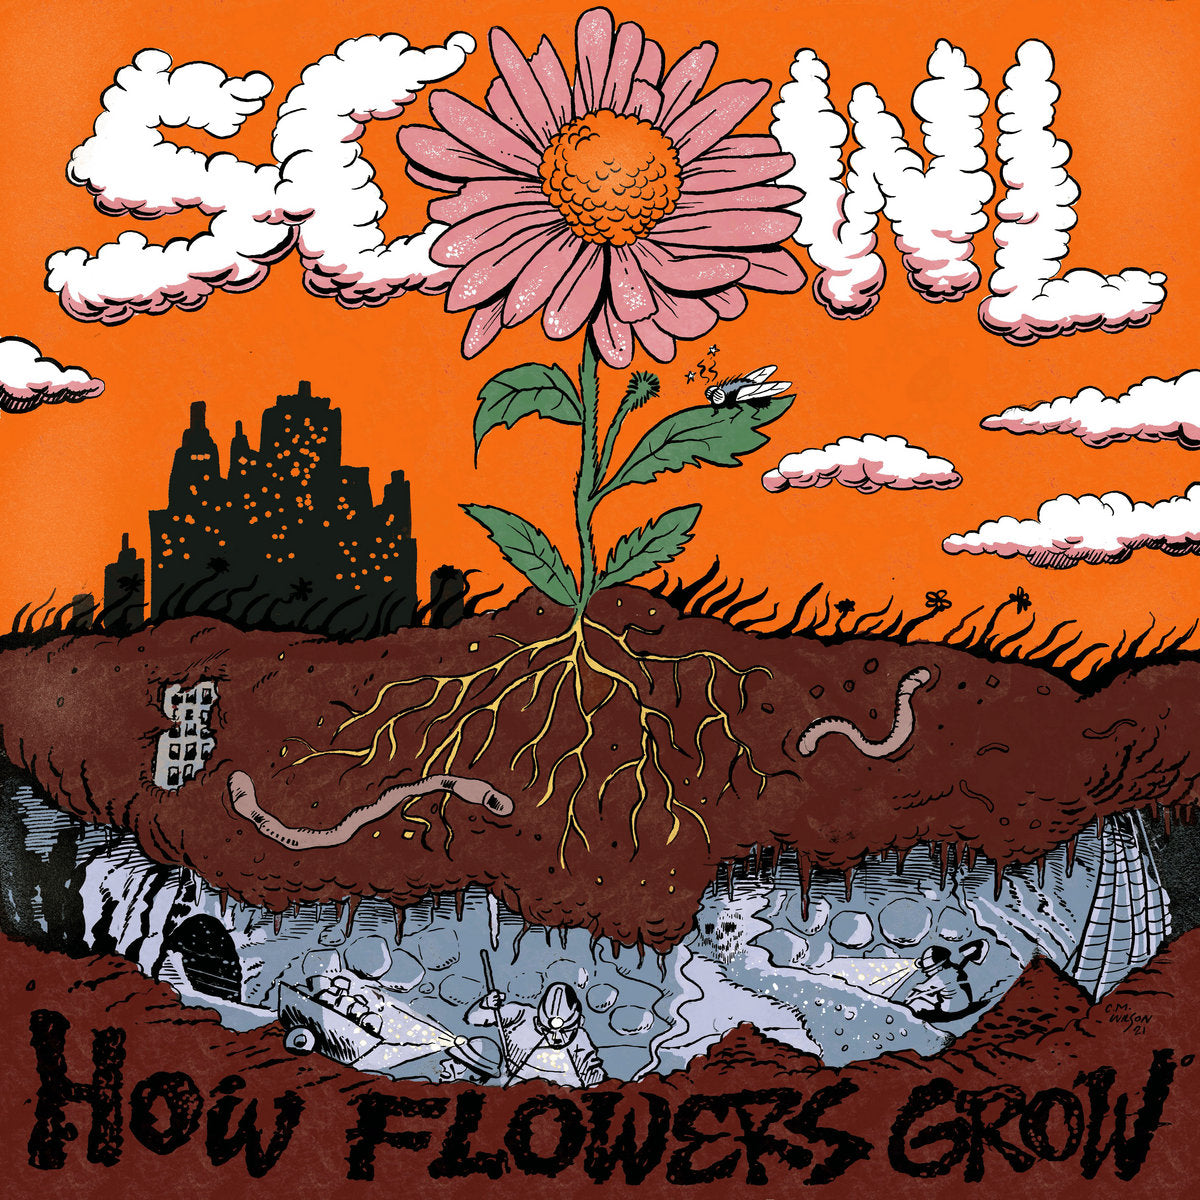 Scowl "How Flowers Grow" LP